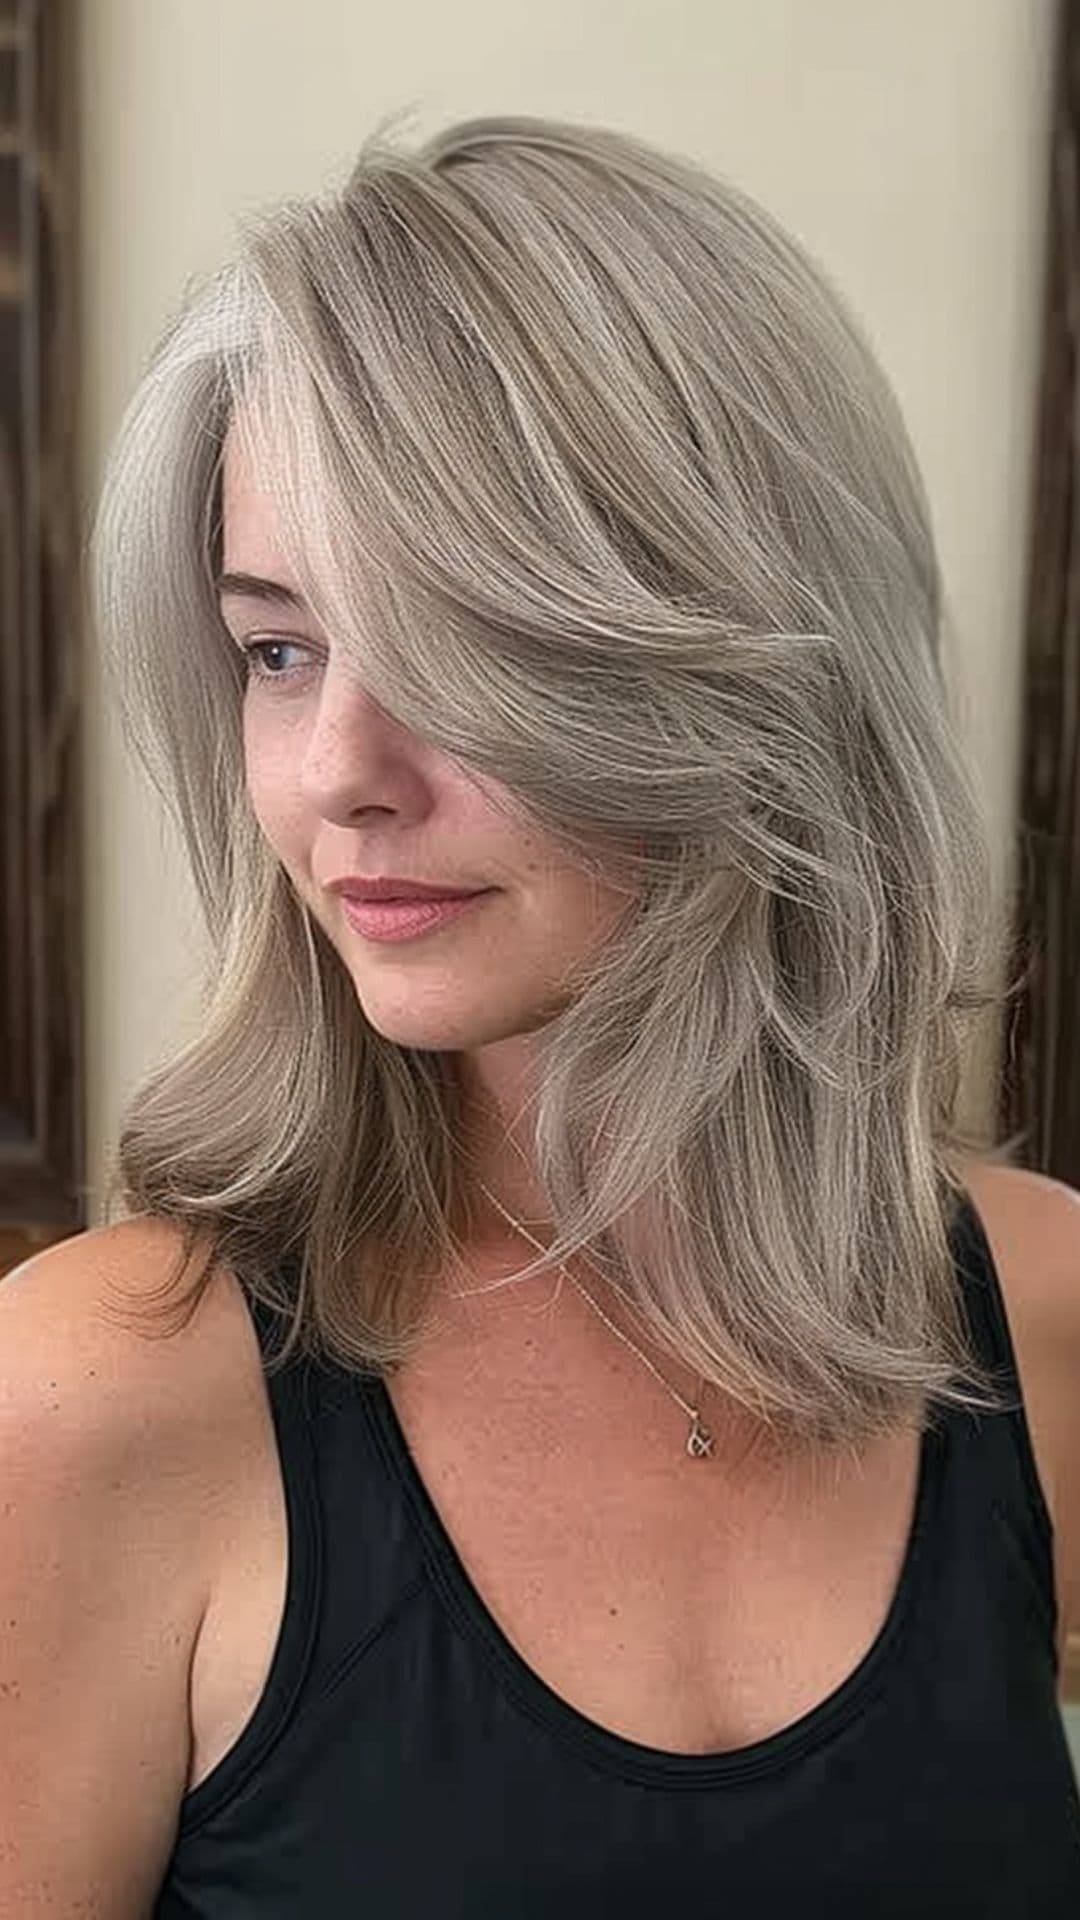 A woman modelling an antique gray hair.